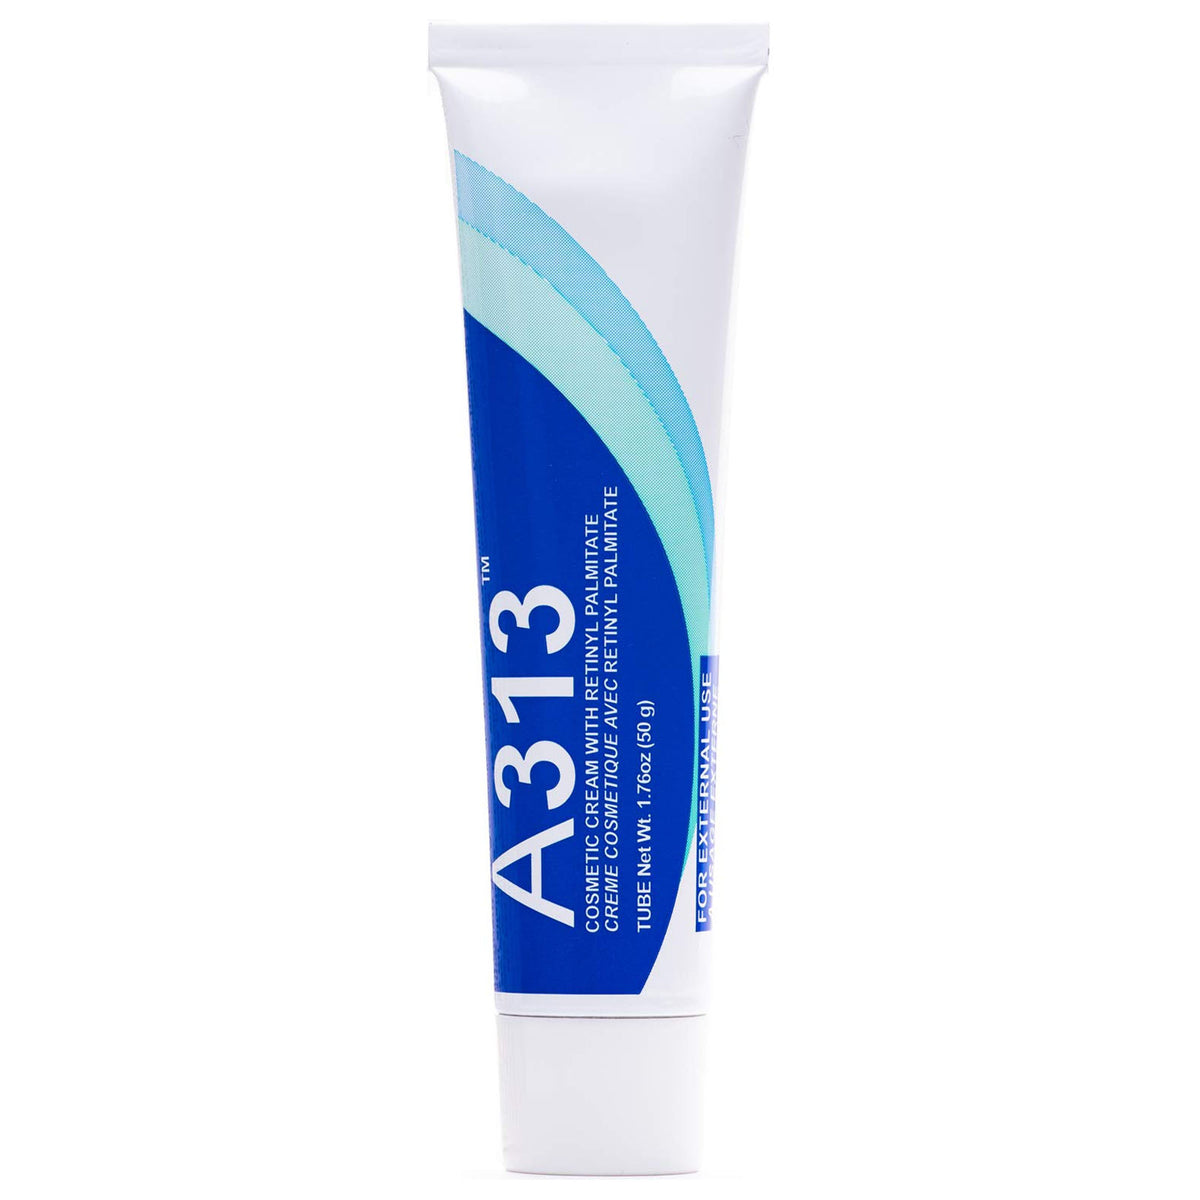 A313 retinol cream 2本セット - 基礎化粧品